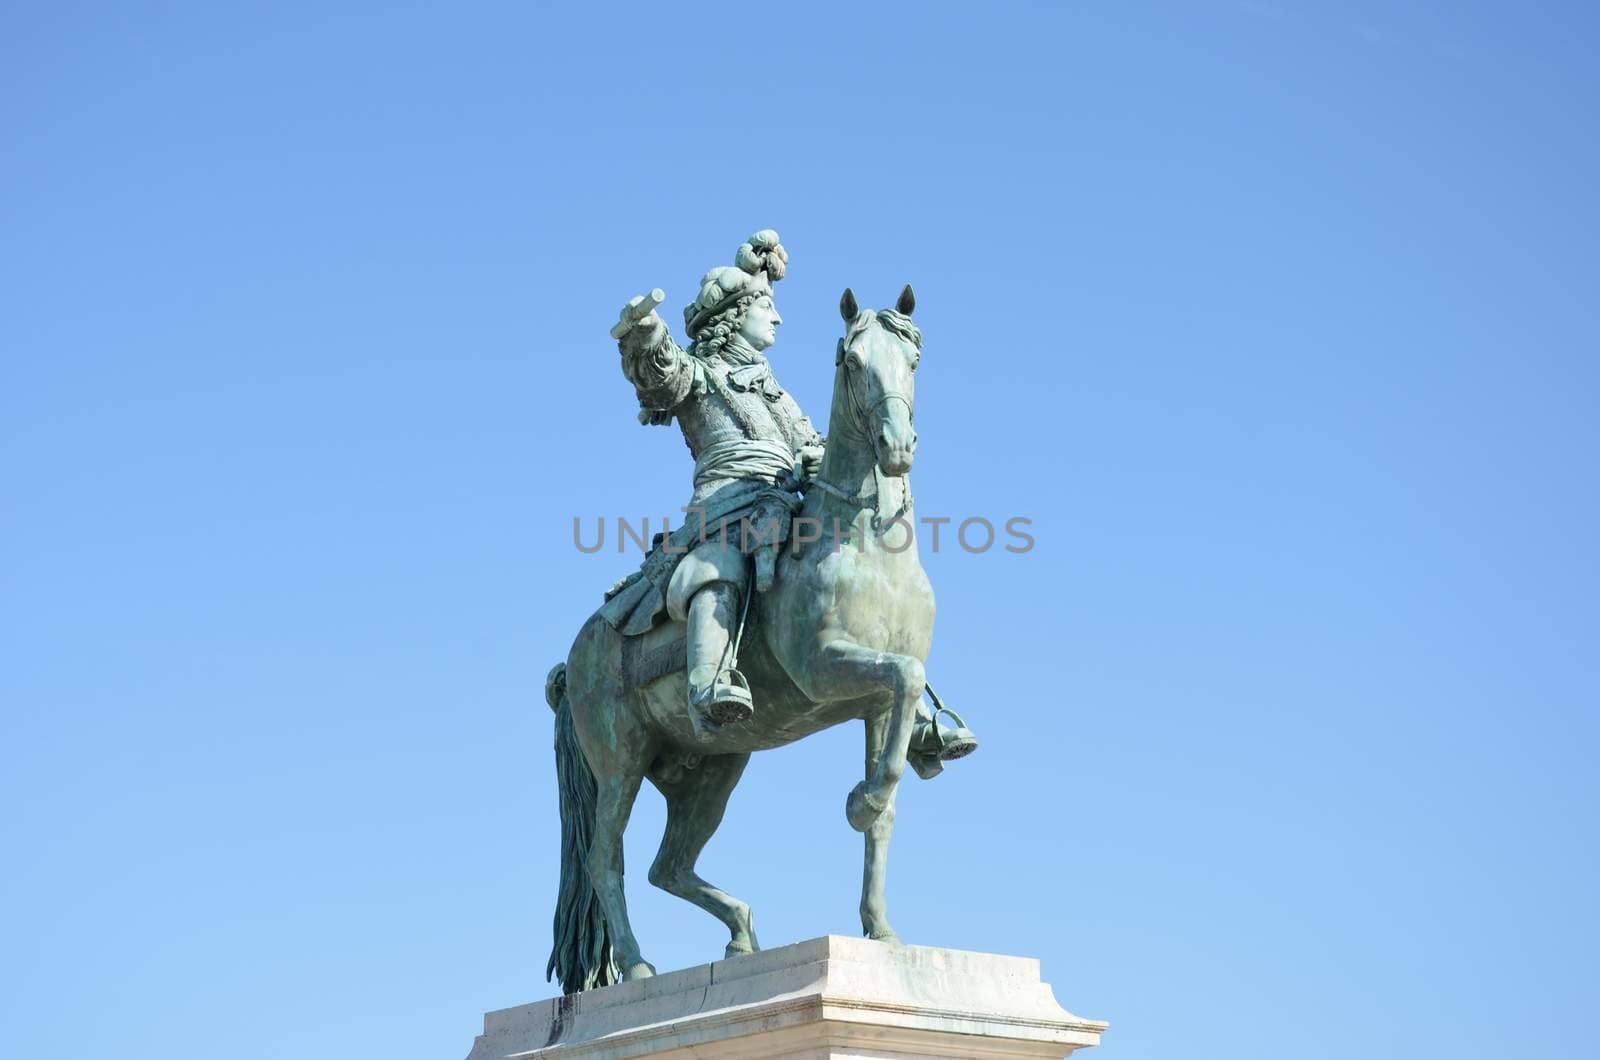 Statue of Louis IVX on horseback by pauws99